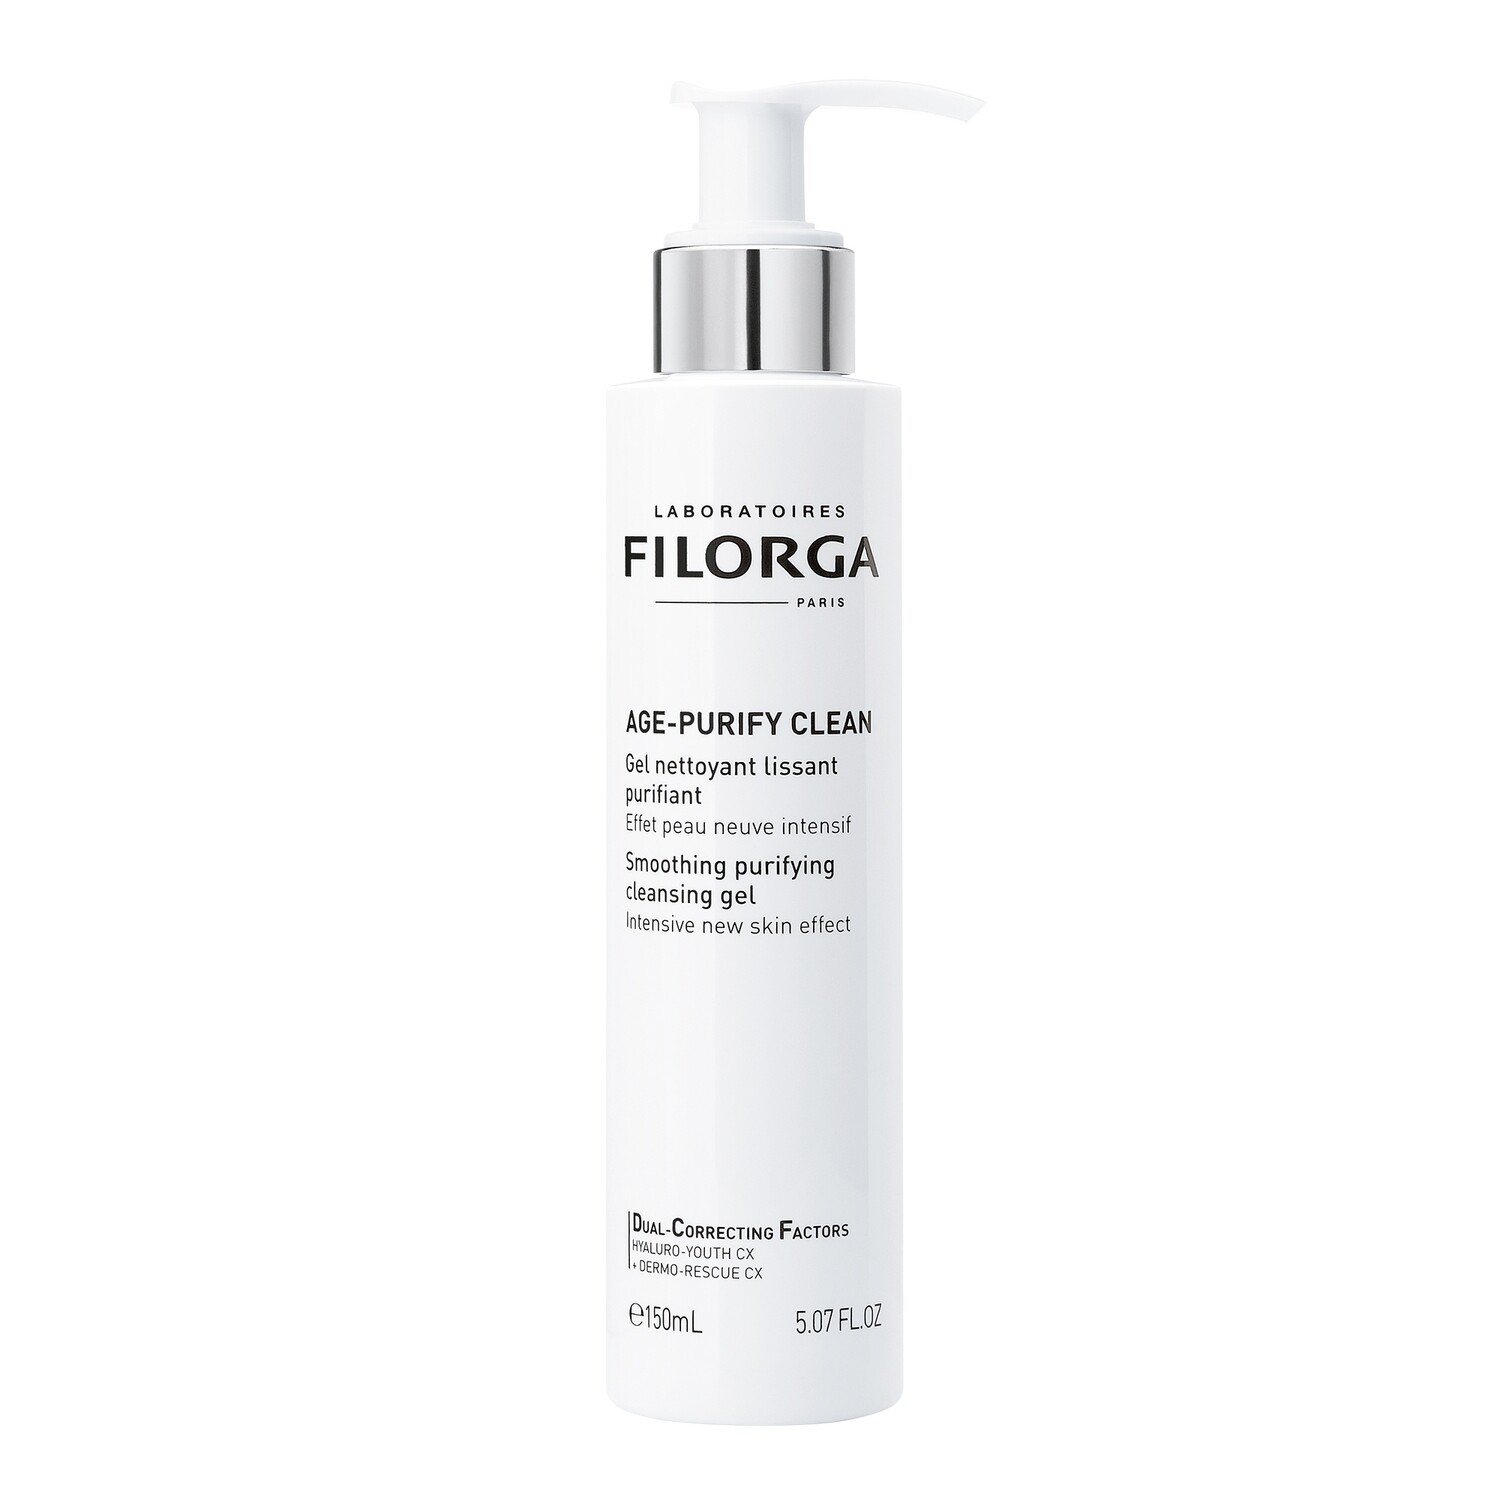 FILORGA AGE-PURIFY CLEAN